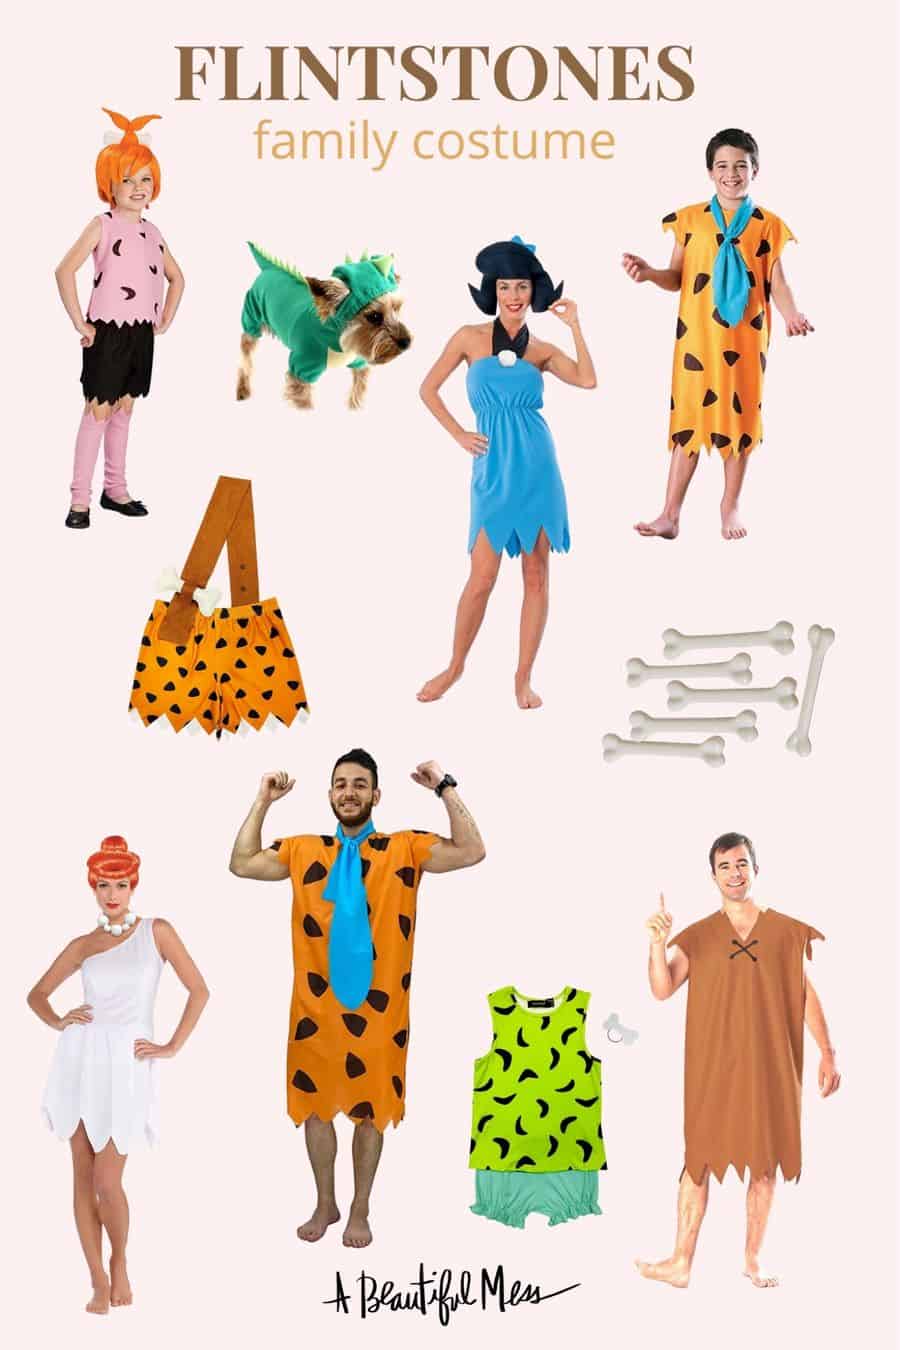 Family halloween costume ideas from The Flintstones